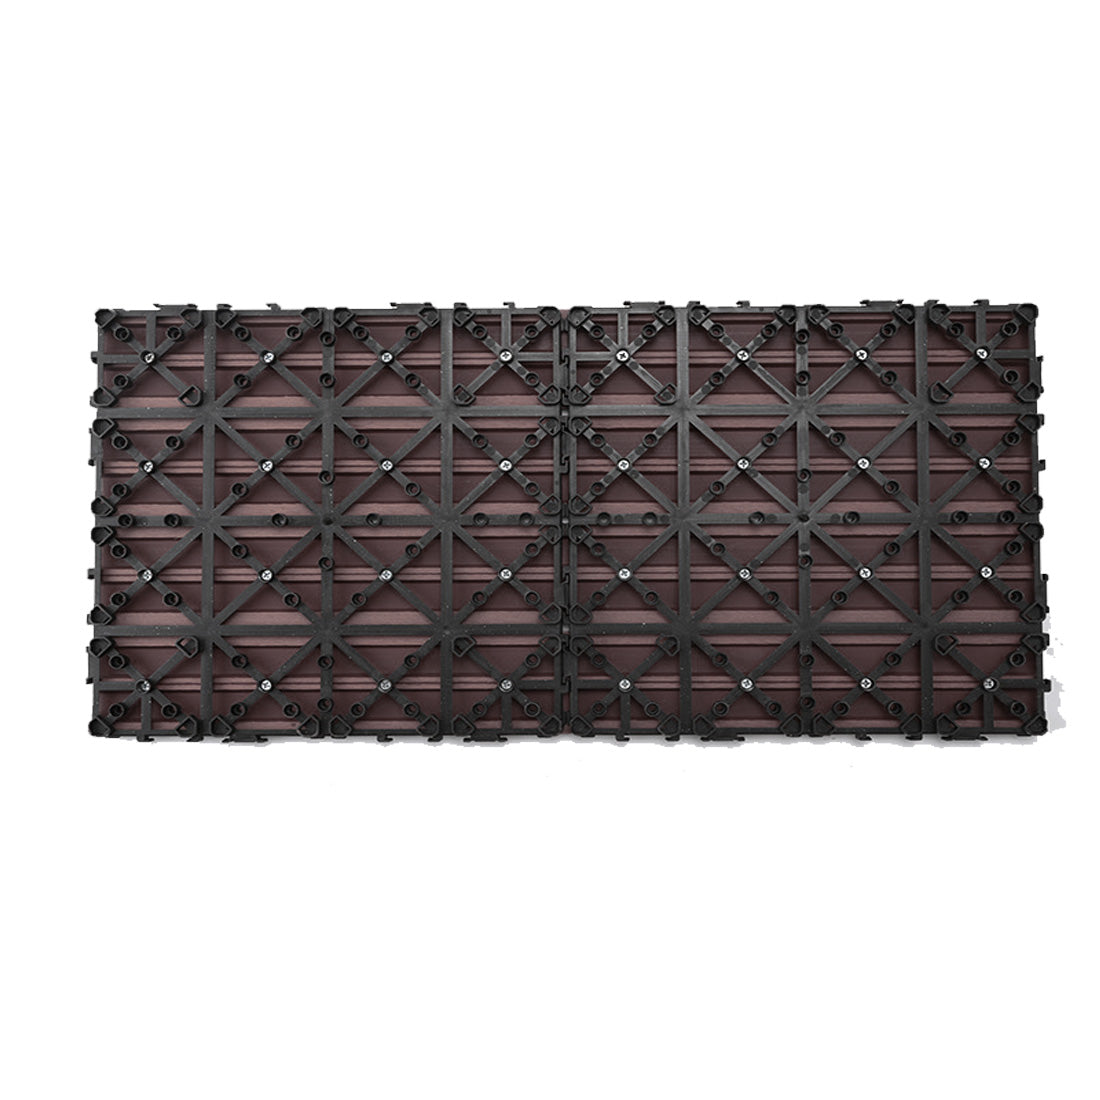 12''x 24'' Interlocking Composite Deck Tiles - Brown (Pack of 10)